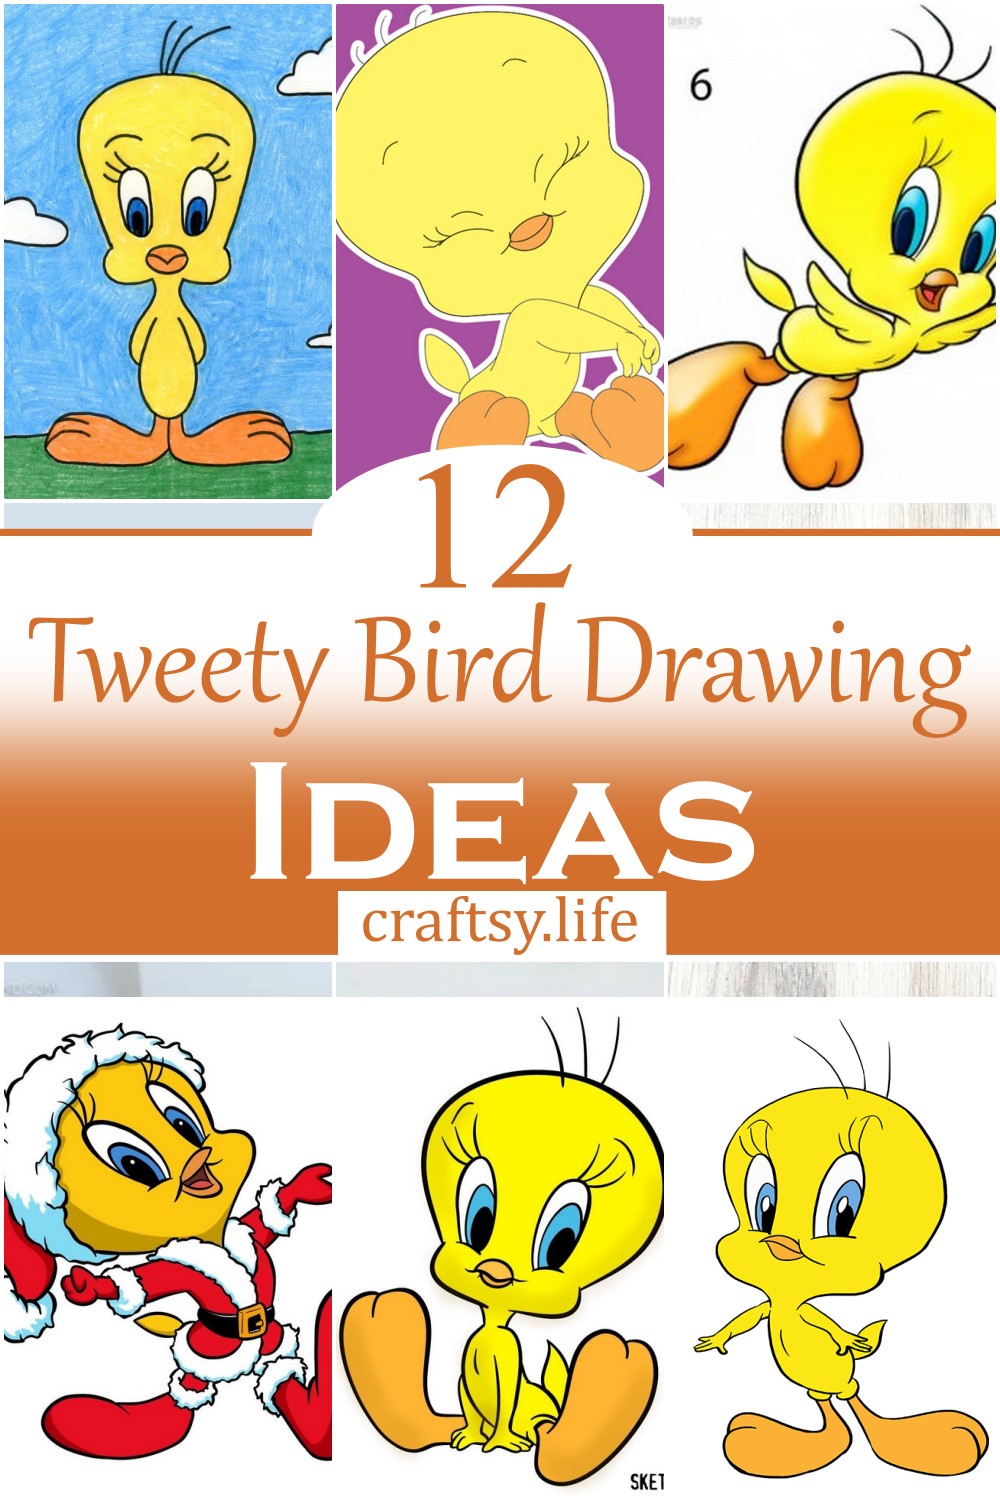 Tweety Bird Drawing Ideas